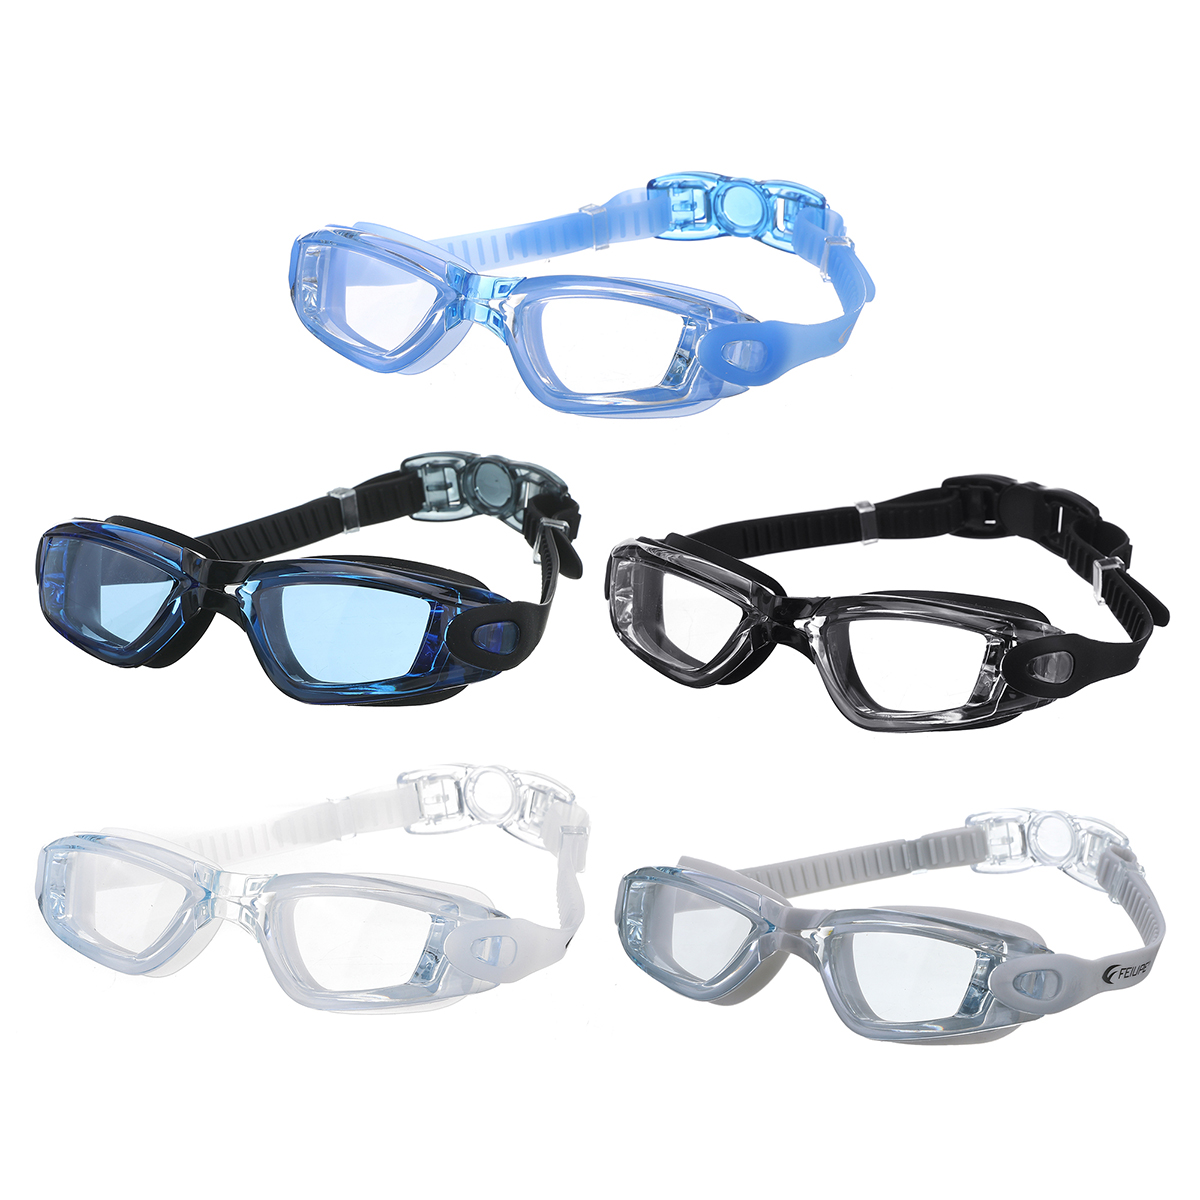 Swimming-Goggles-Anti-fog-Anti-UV-Fog-Protection-No-Leaking-Clear-Wide-Vision-Eye-Pool-Swim-Glassess-1723669-1